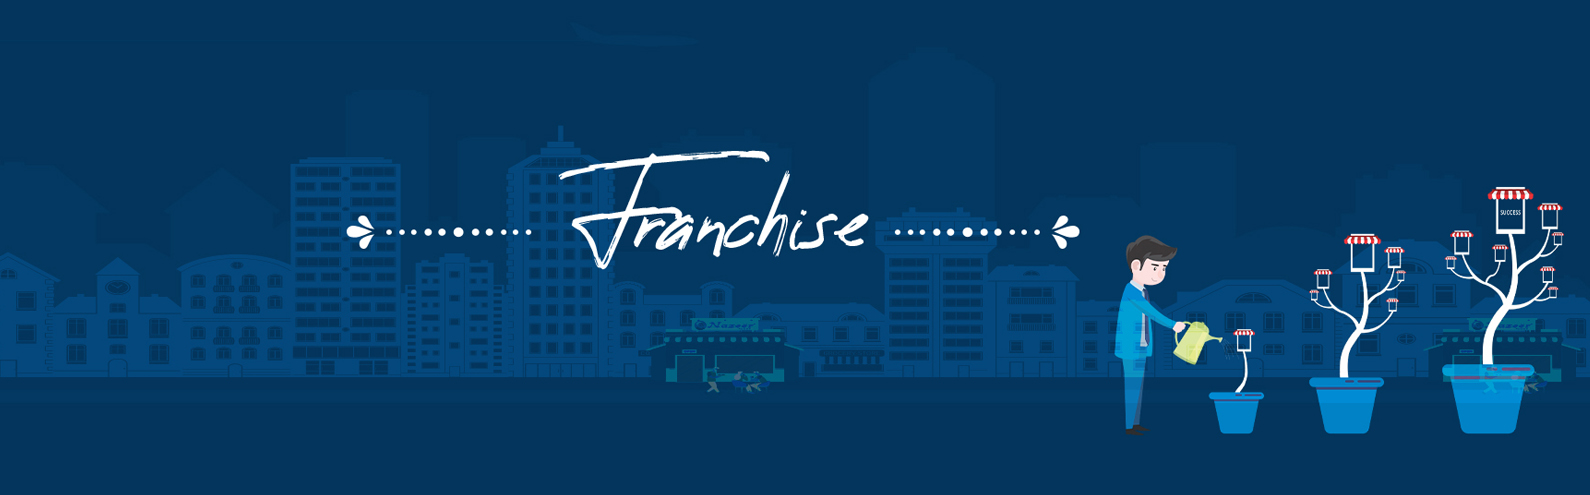 active_franchise